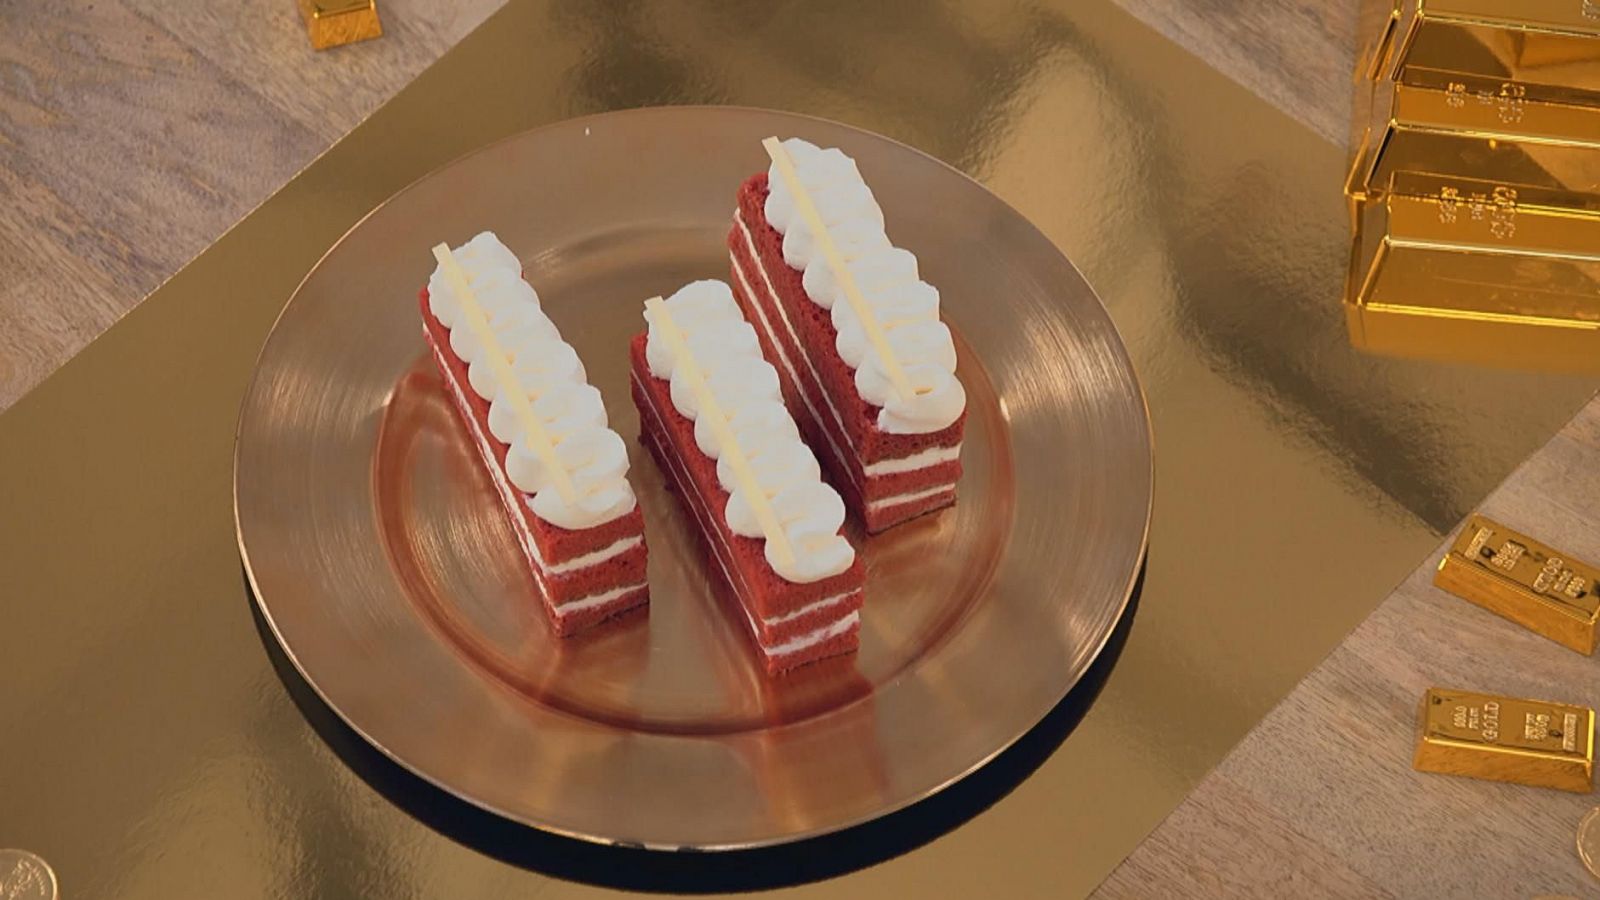 Imagen de la receta de la tarta Red Velvet con forma de lingotes de oro en 'Bake Off'